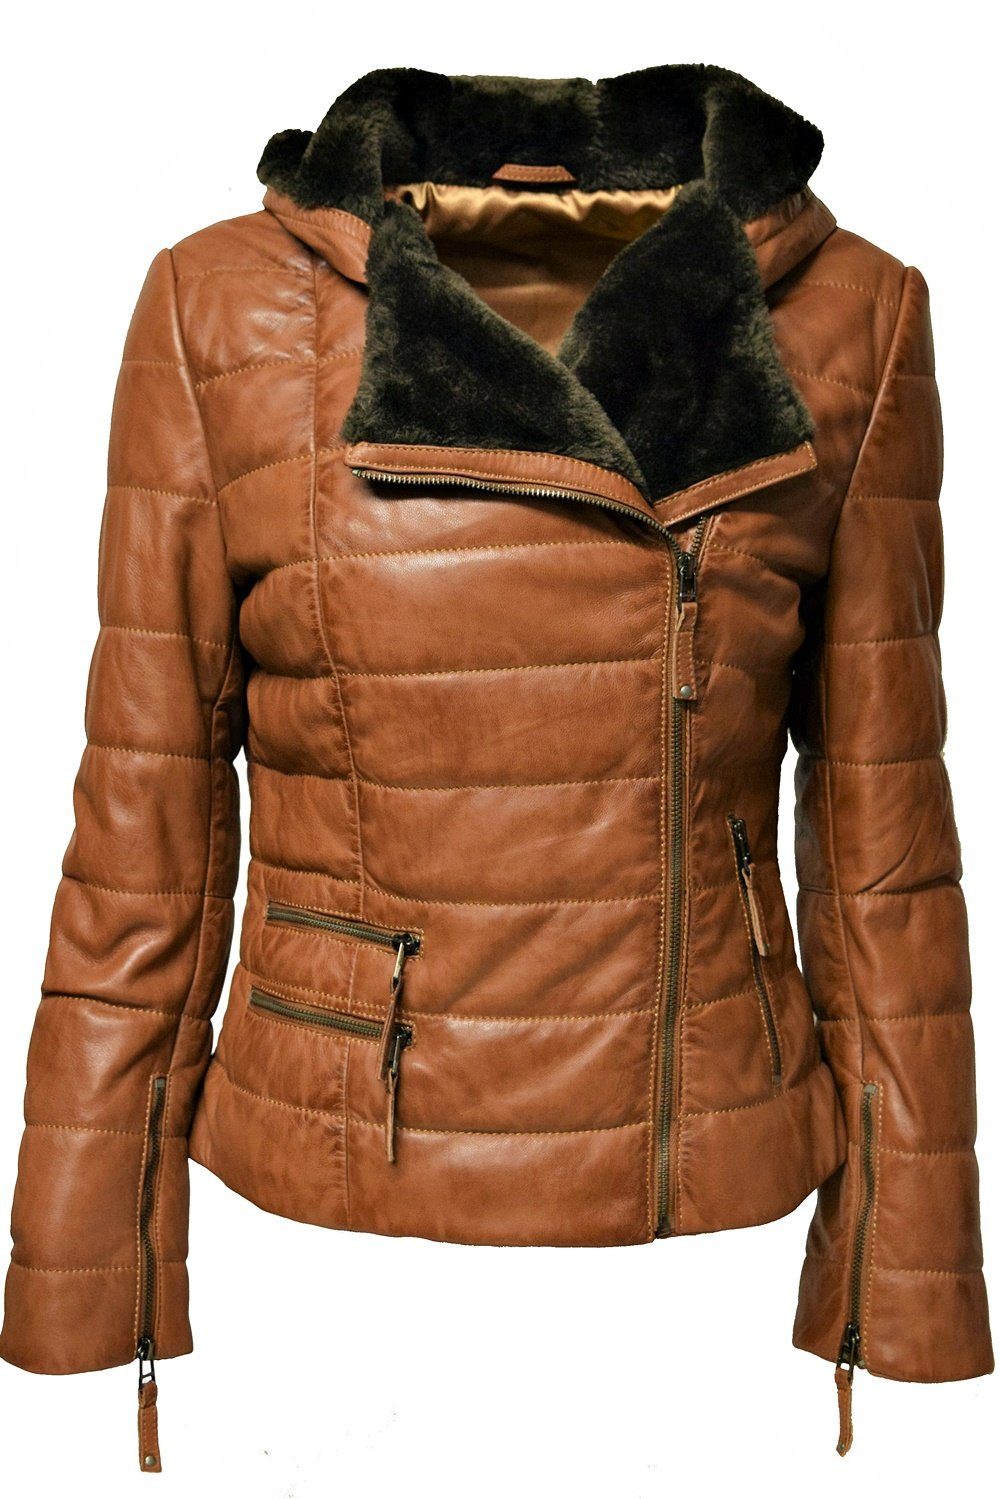 Zimmert Leather Lederjacke »Mimi« Stepp-Lederjacke, Weiches Leder, mit  Kapuze online kaufen | OTTO